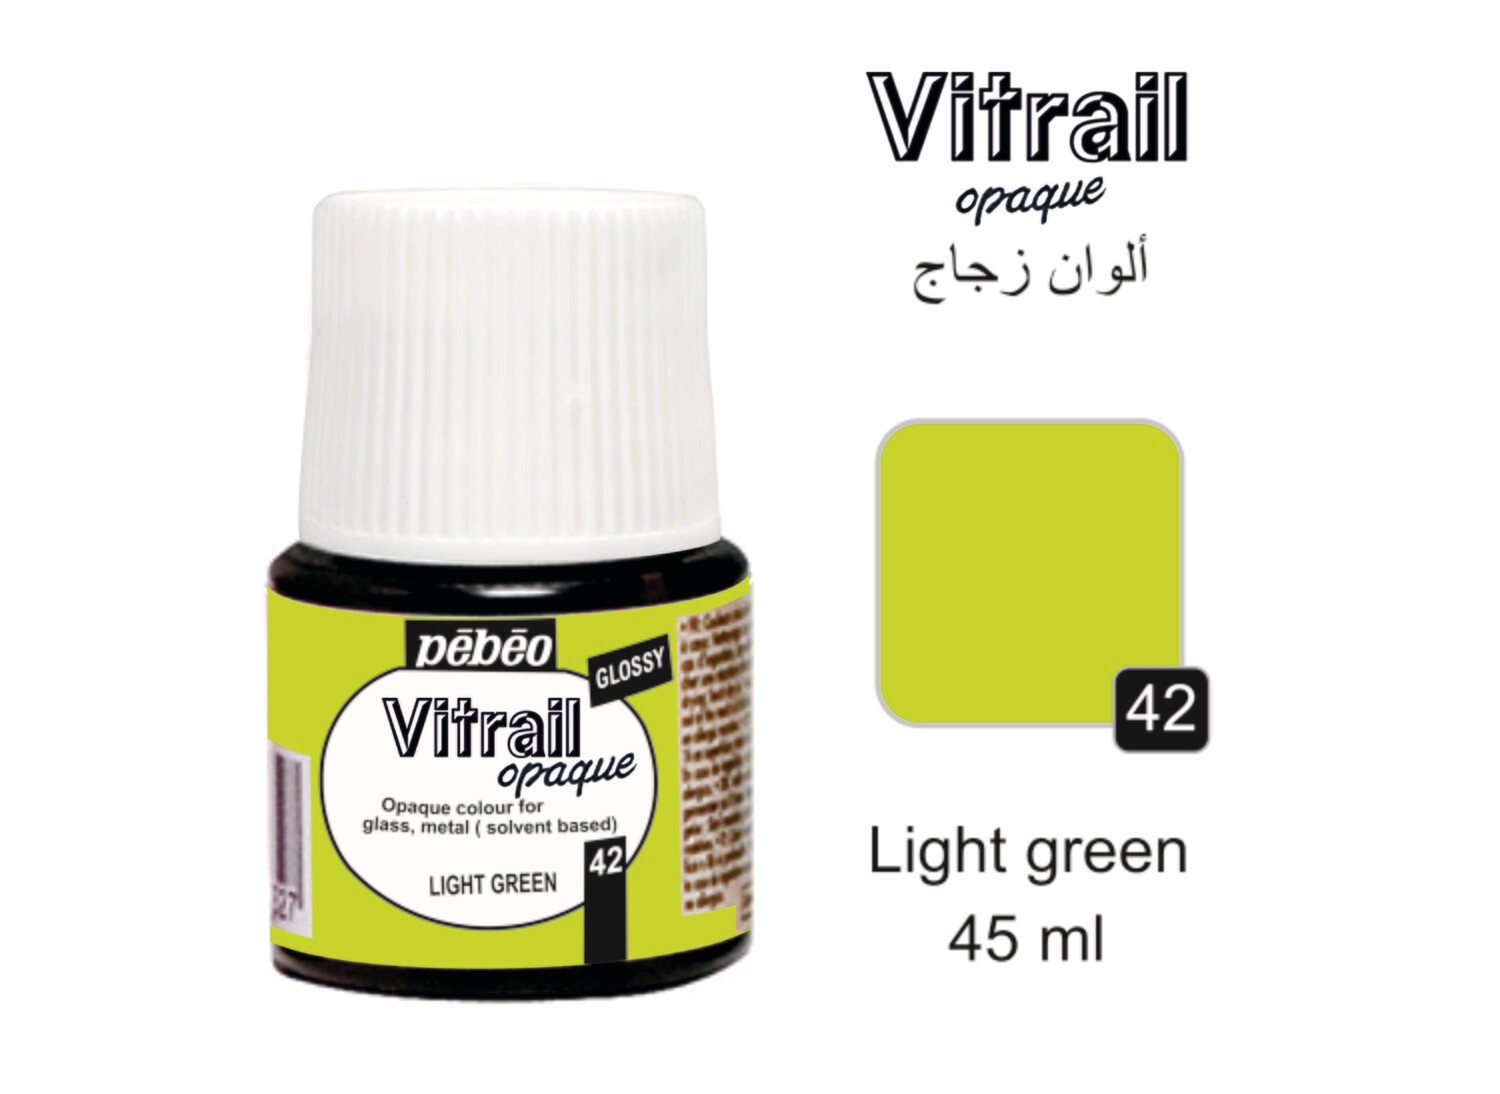 VITRAIL glass colors Light green No. 42, 45 ml, Opaque